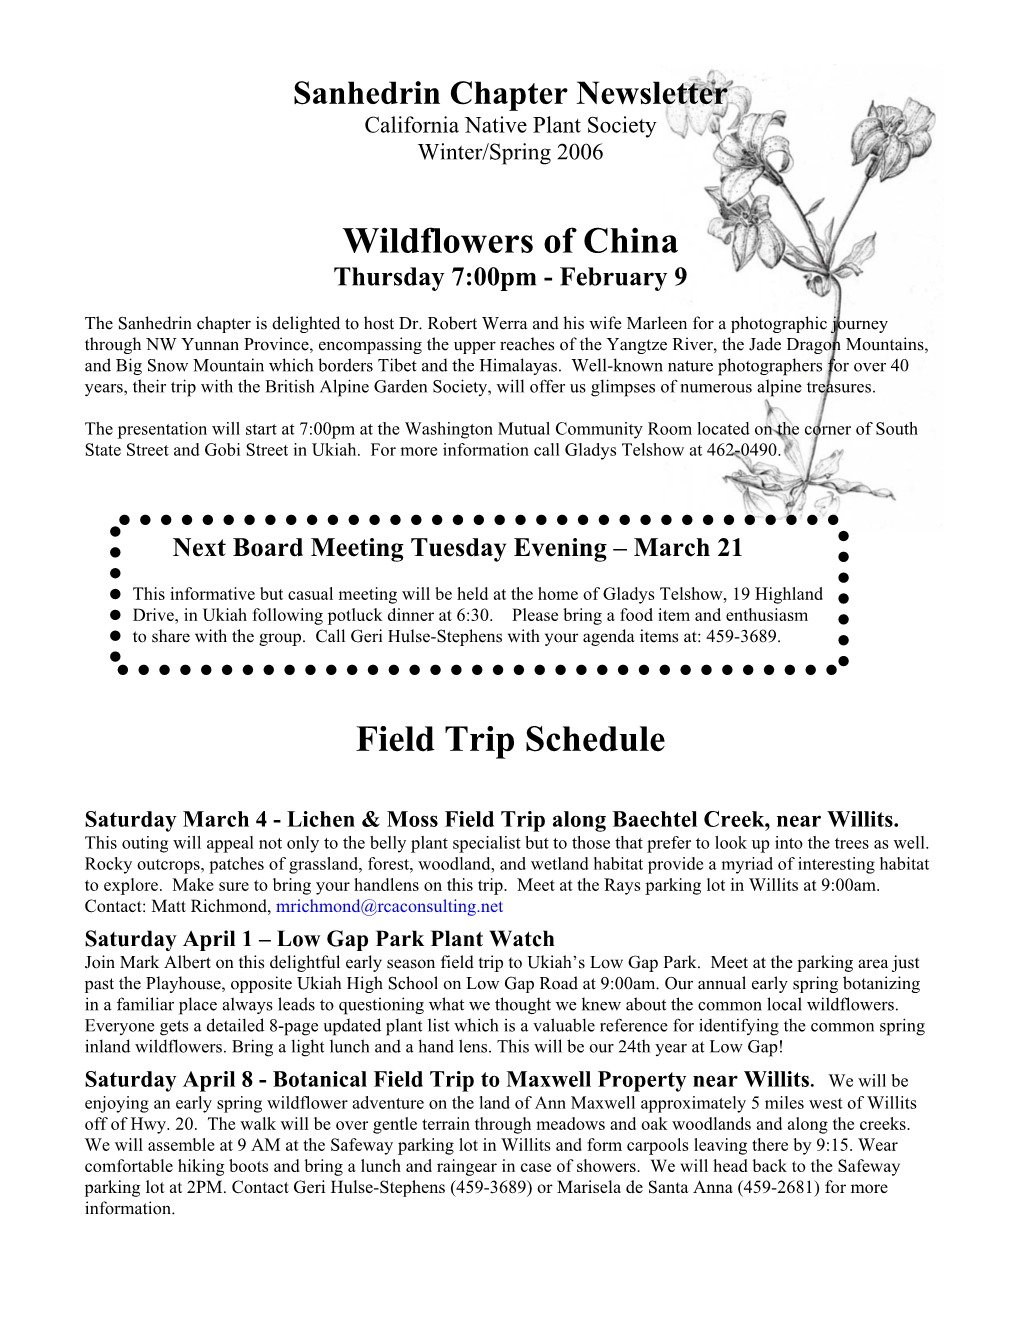 Wildflowers of China Field Trip Schedule